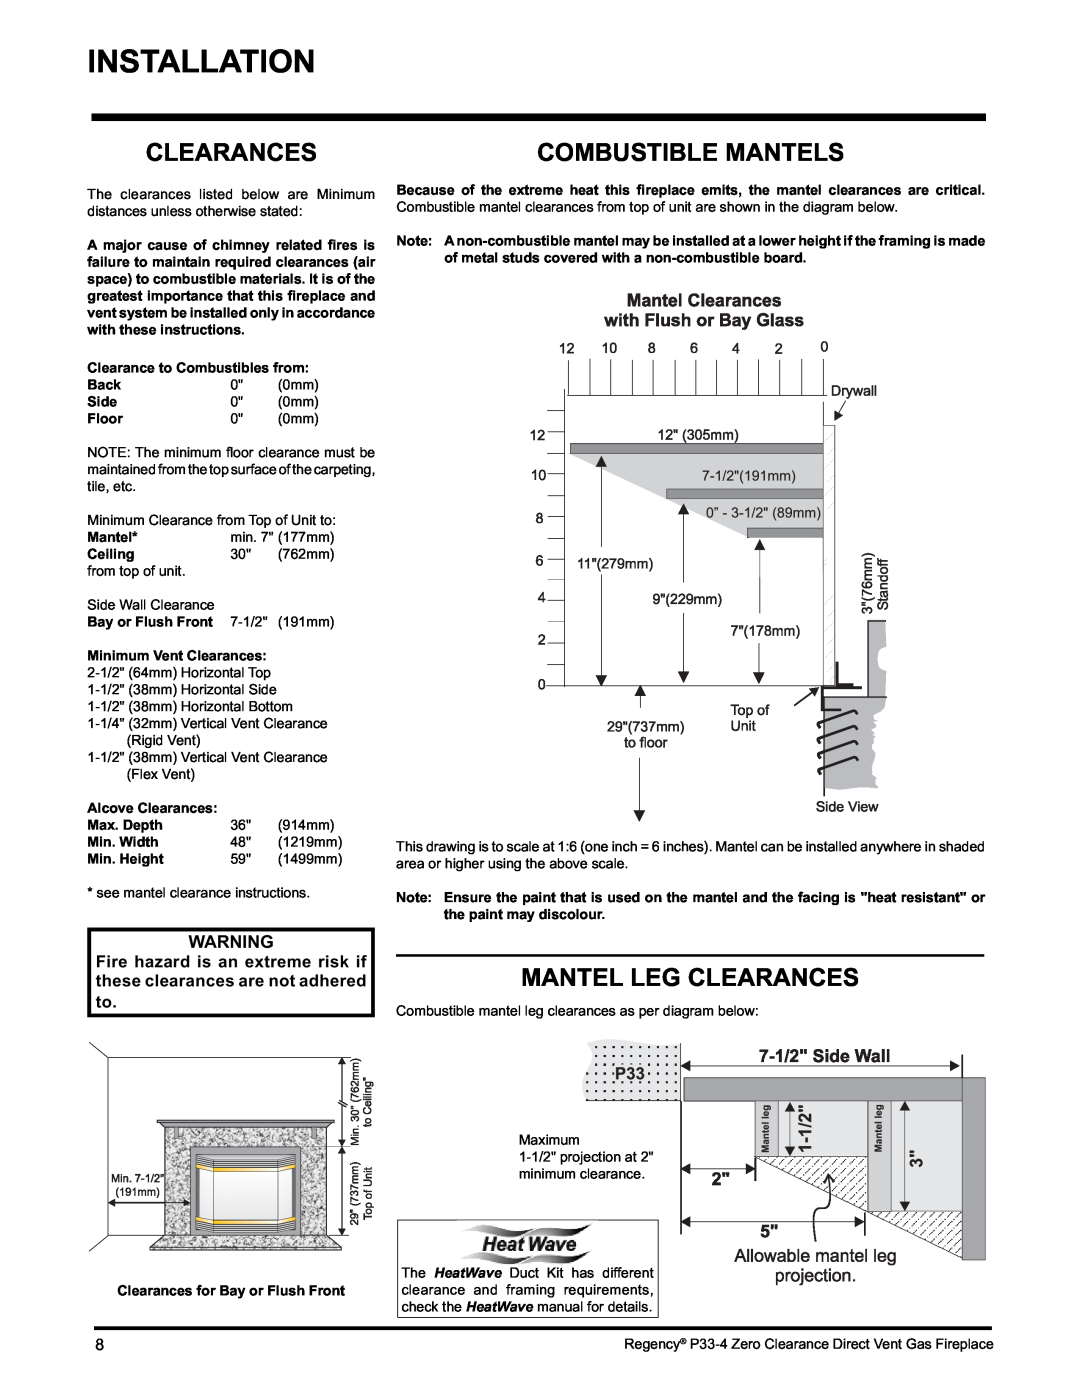 Regency P33-NG4 Mantel Leg Clearances, Combustible Mantels, Clearance to Combustibles from, Back, Side, Floor, Ceiling 